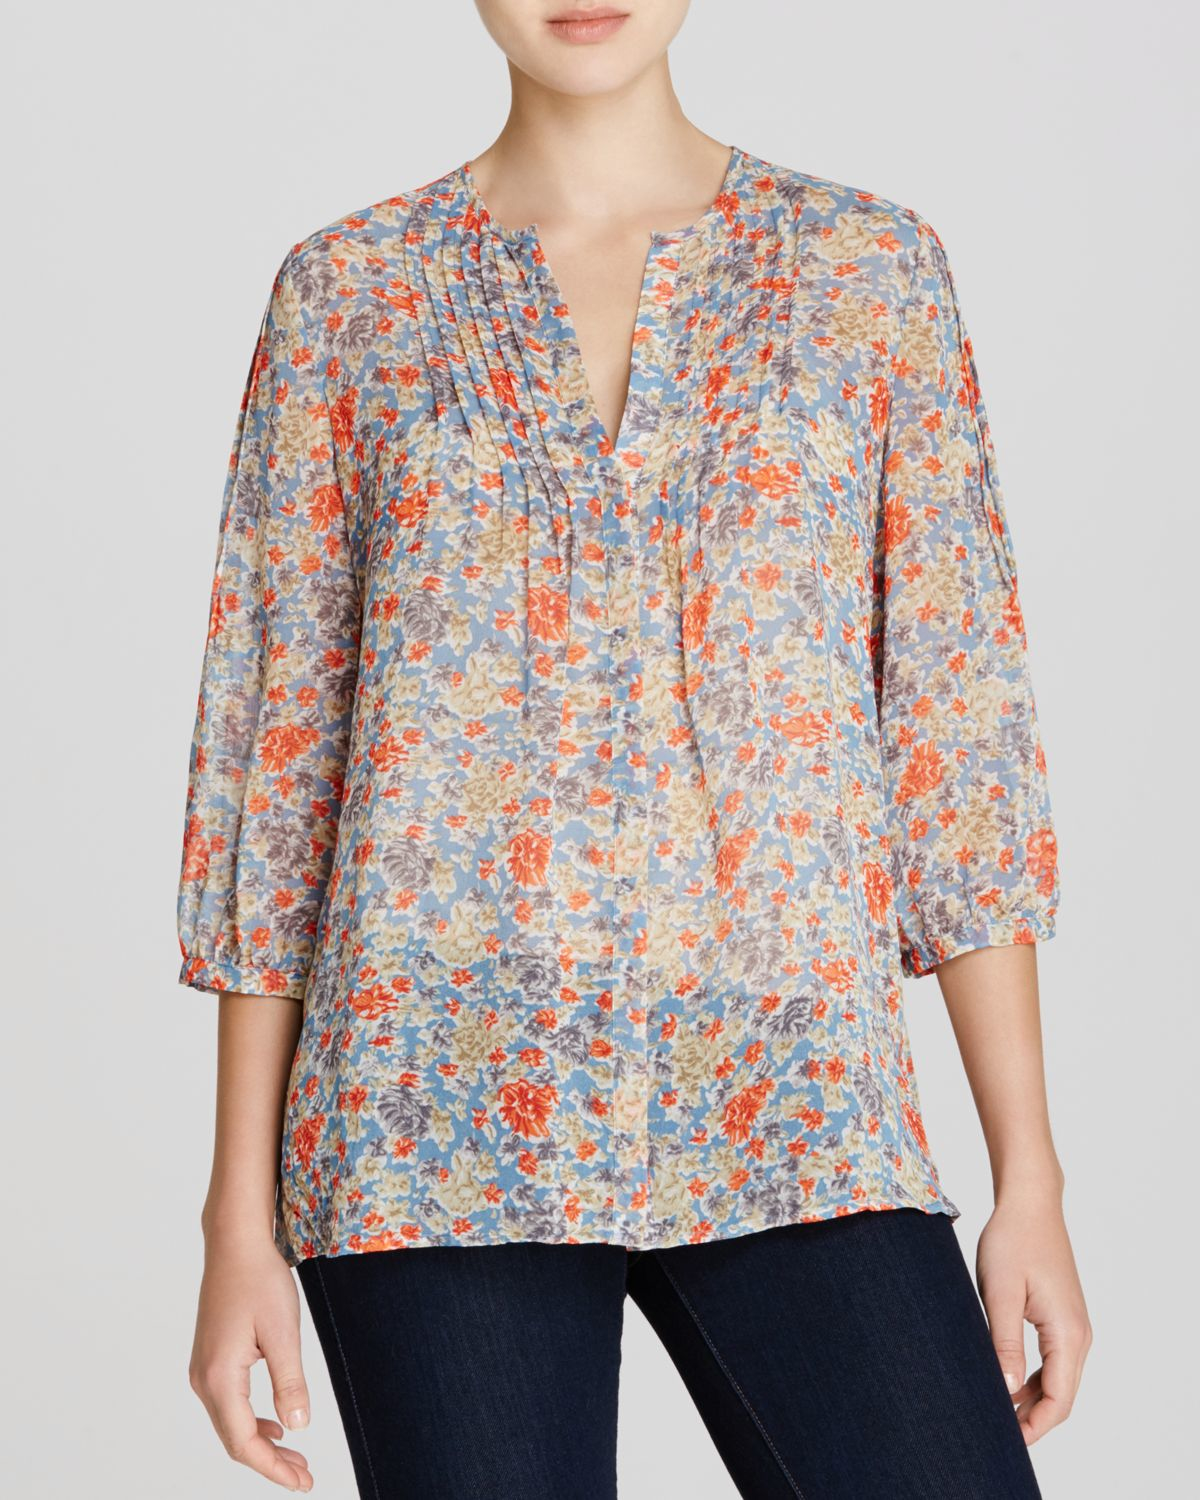 Joie Lacee Floral Print Silk Blouse in Orange (Slate Blue) | Lyst